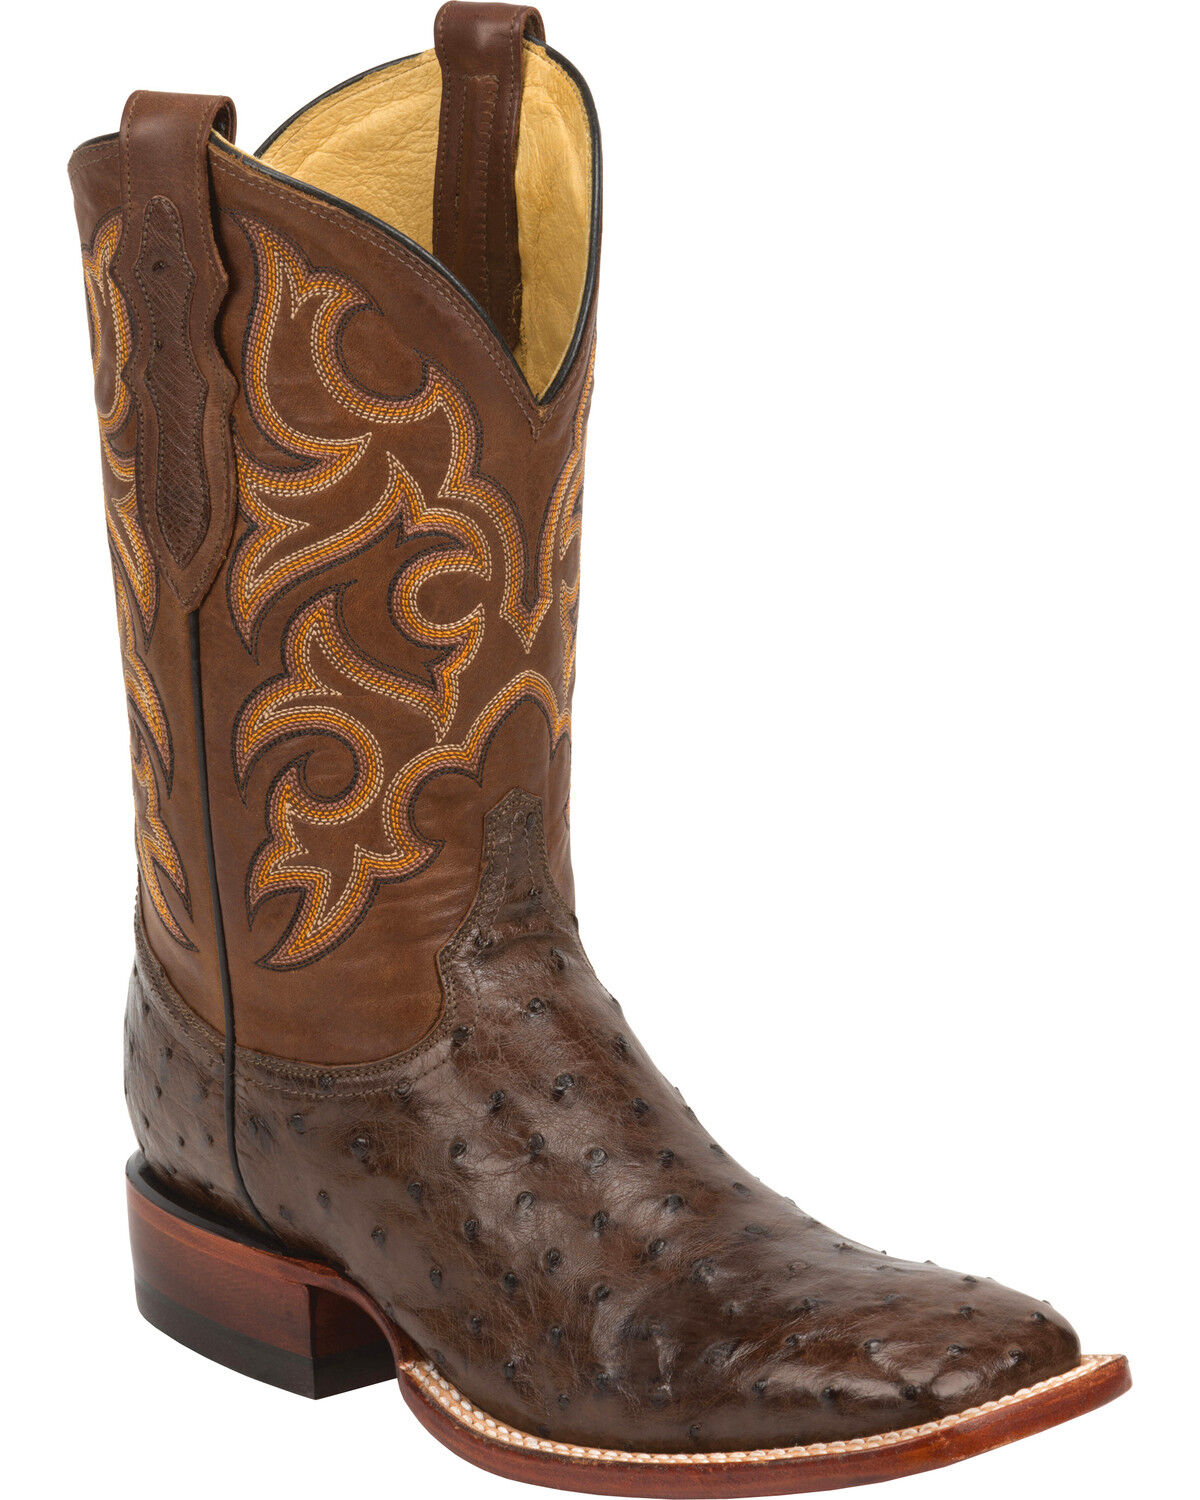 men's elk skin cowboy boots